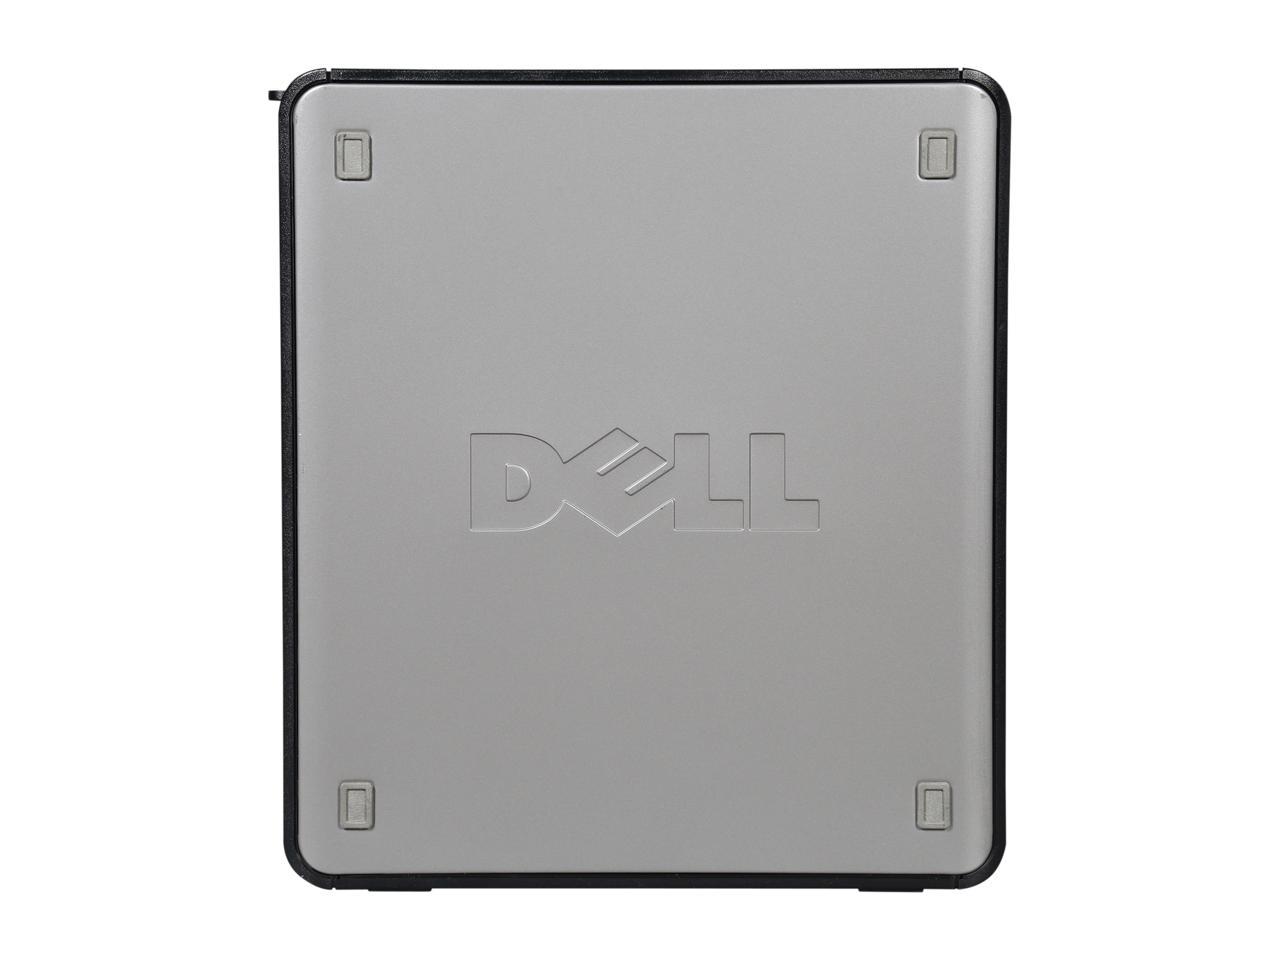 DELL Desktop Computer OptiPlex 380 Dual Core 2.70GHz 2GB DDR3 160GB HDD Windows 7 Home Premium (Microsoft Authorized Refurbish)